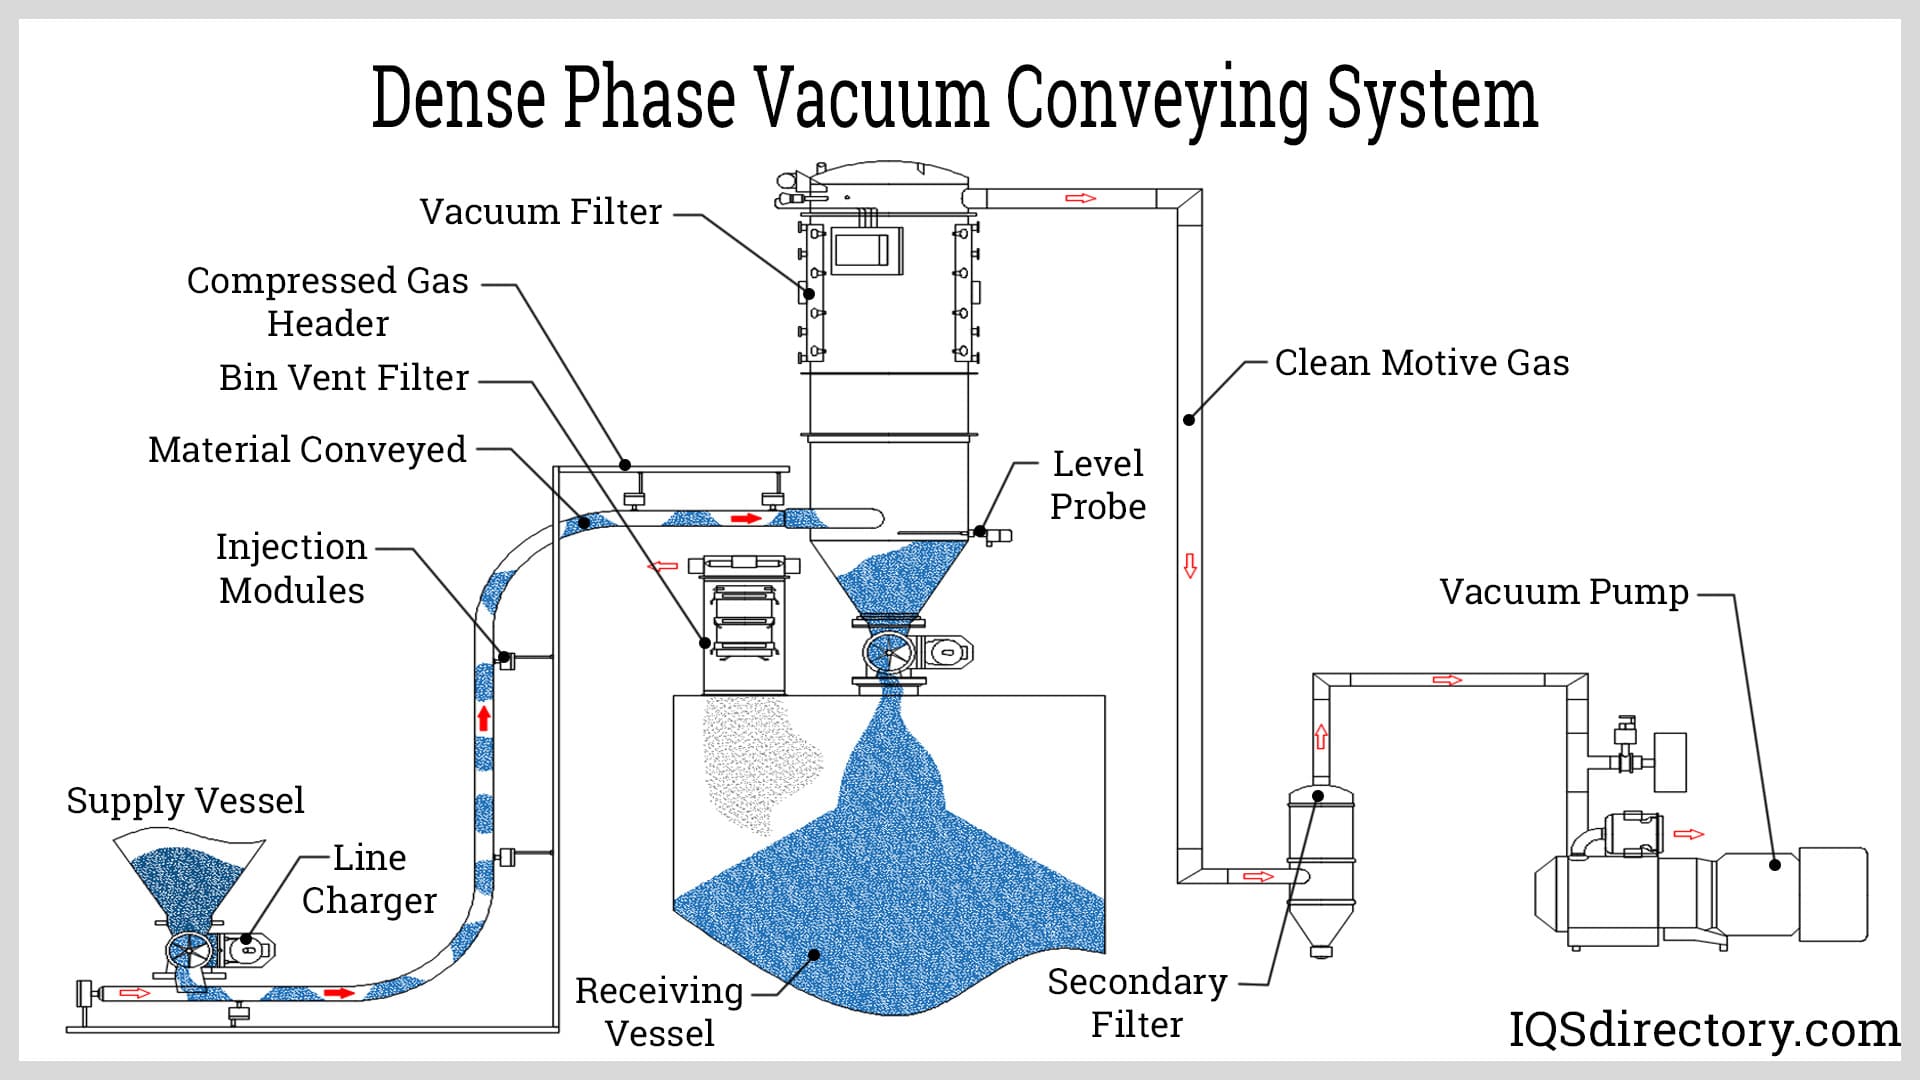 Dense Phase Vacuum Conveying System